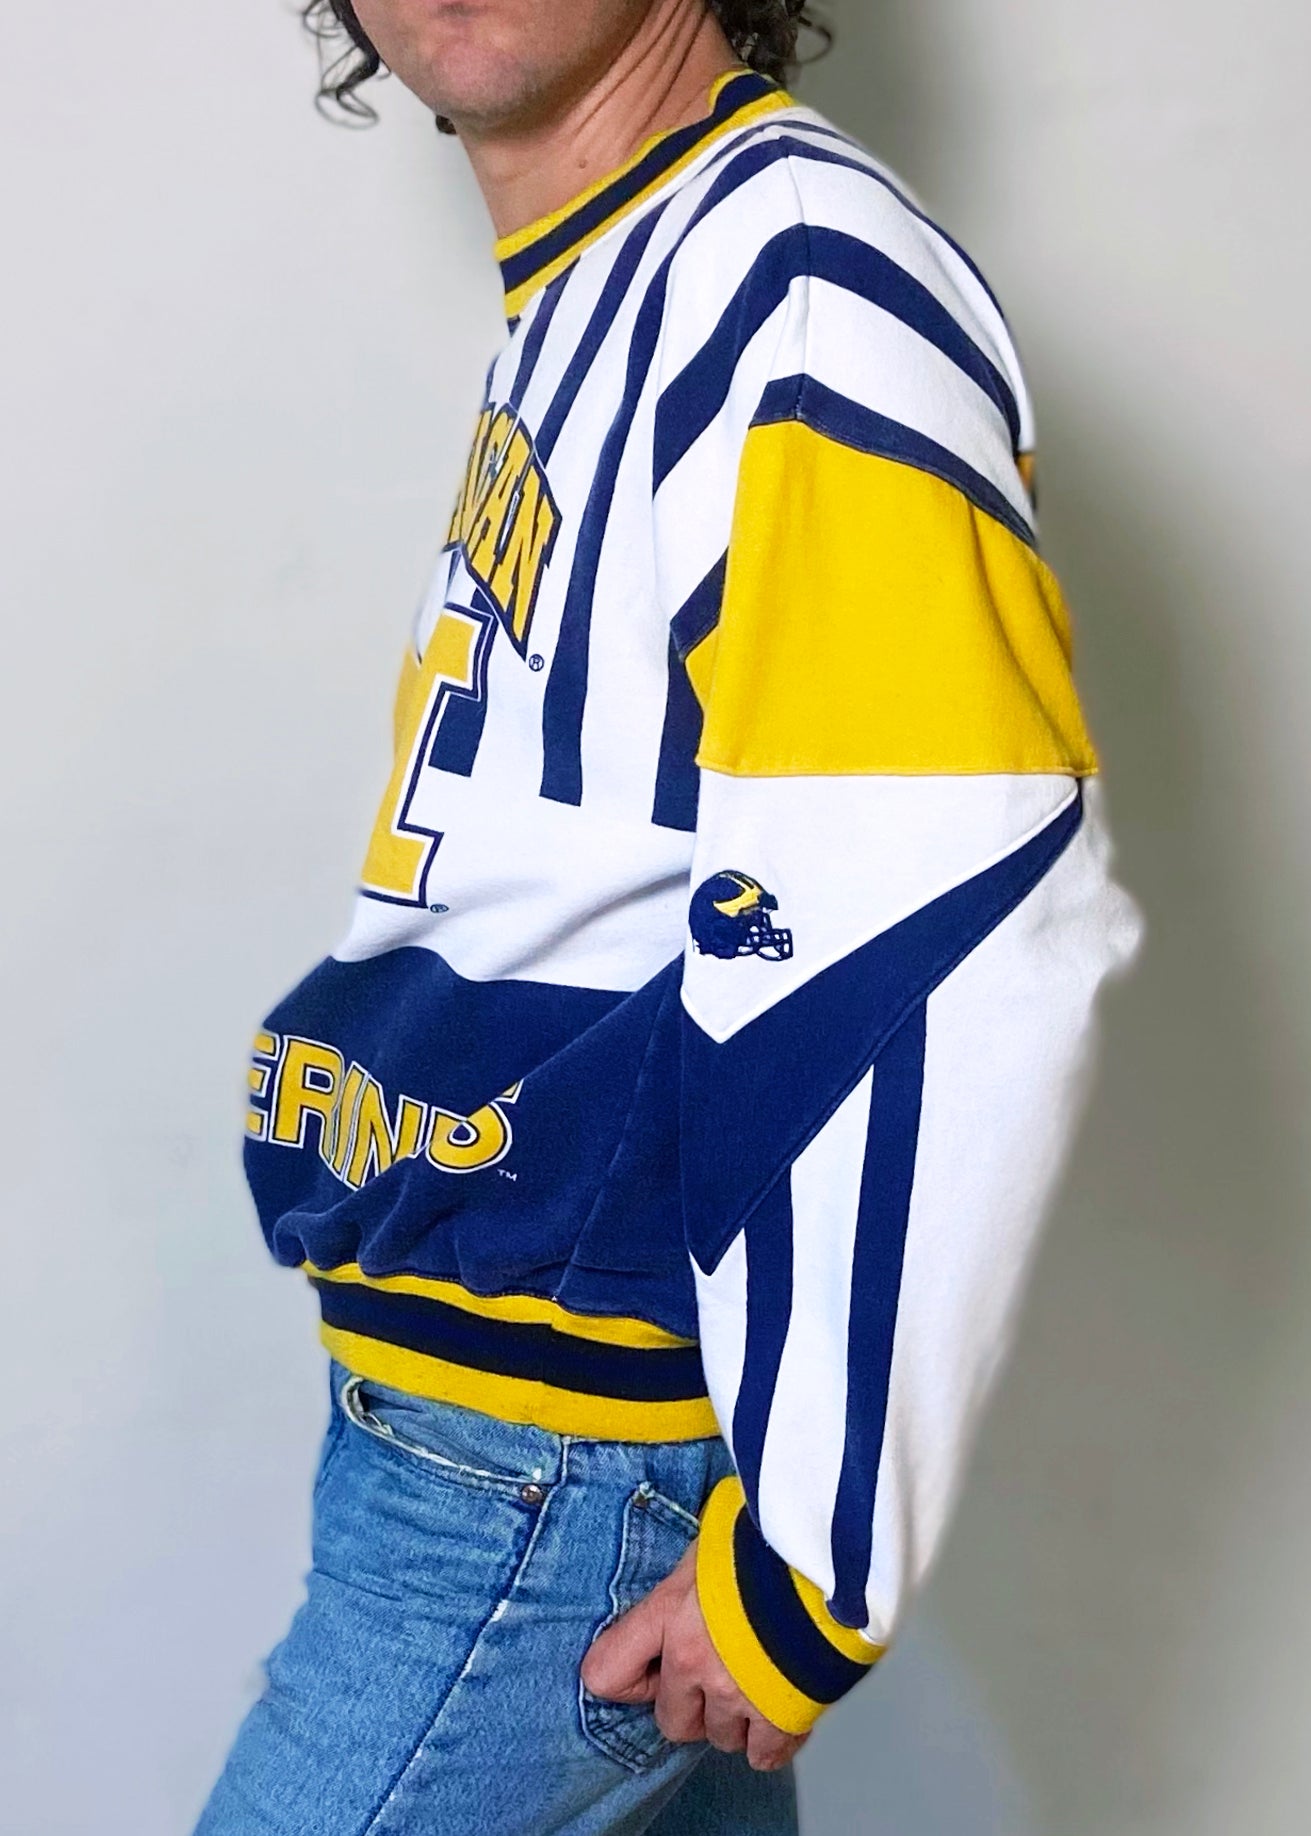 Michigan Wolverines Sweatshirt (c.1993)